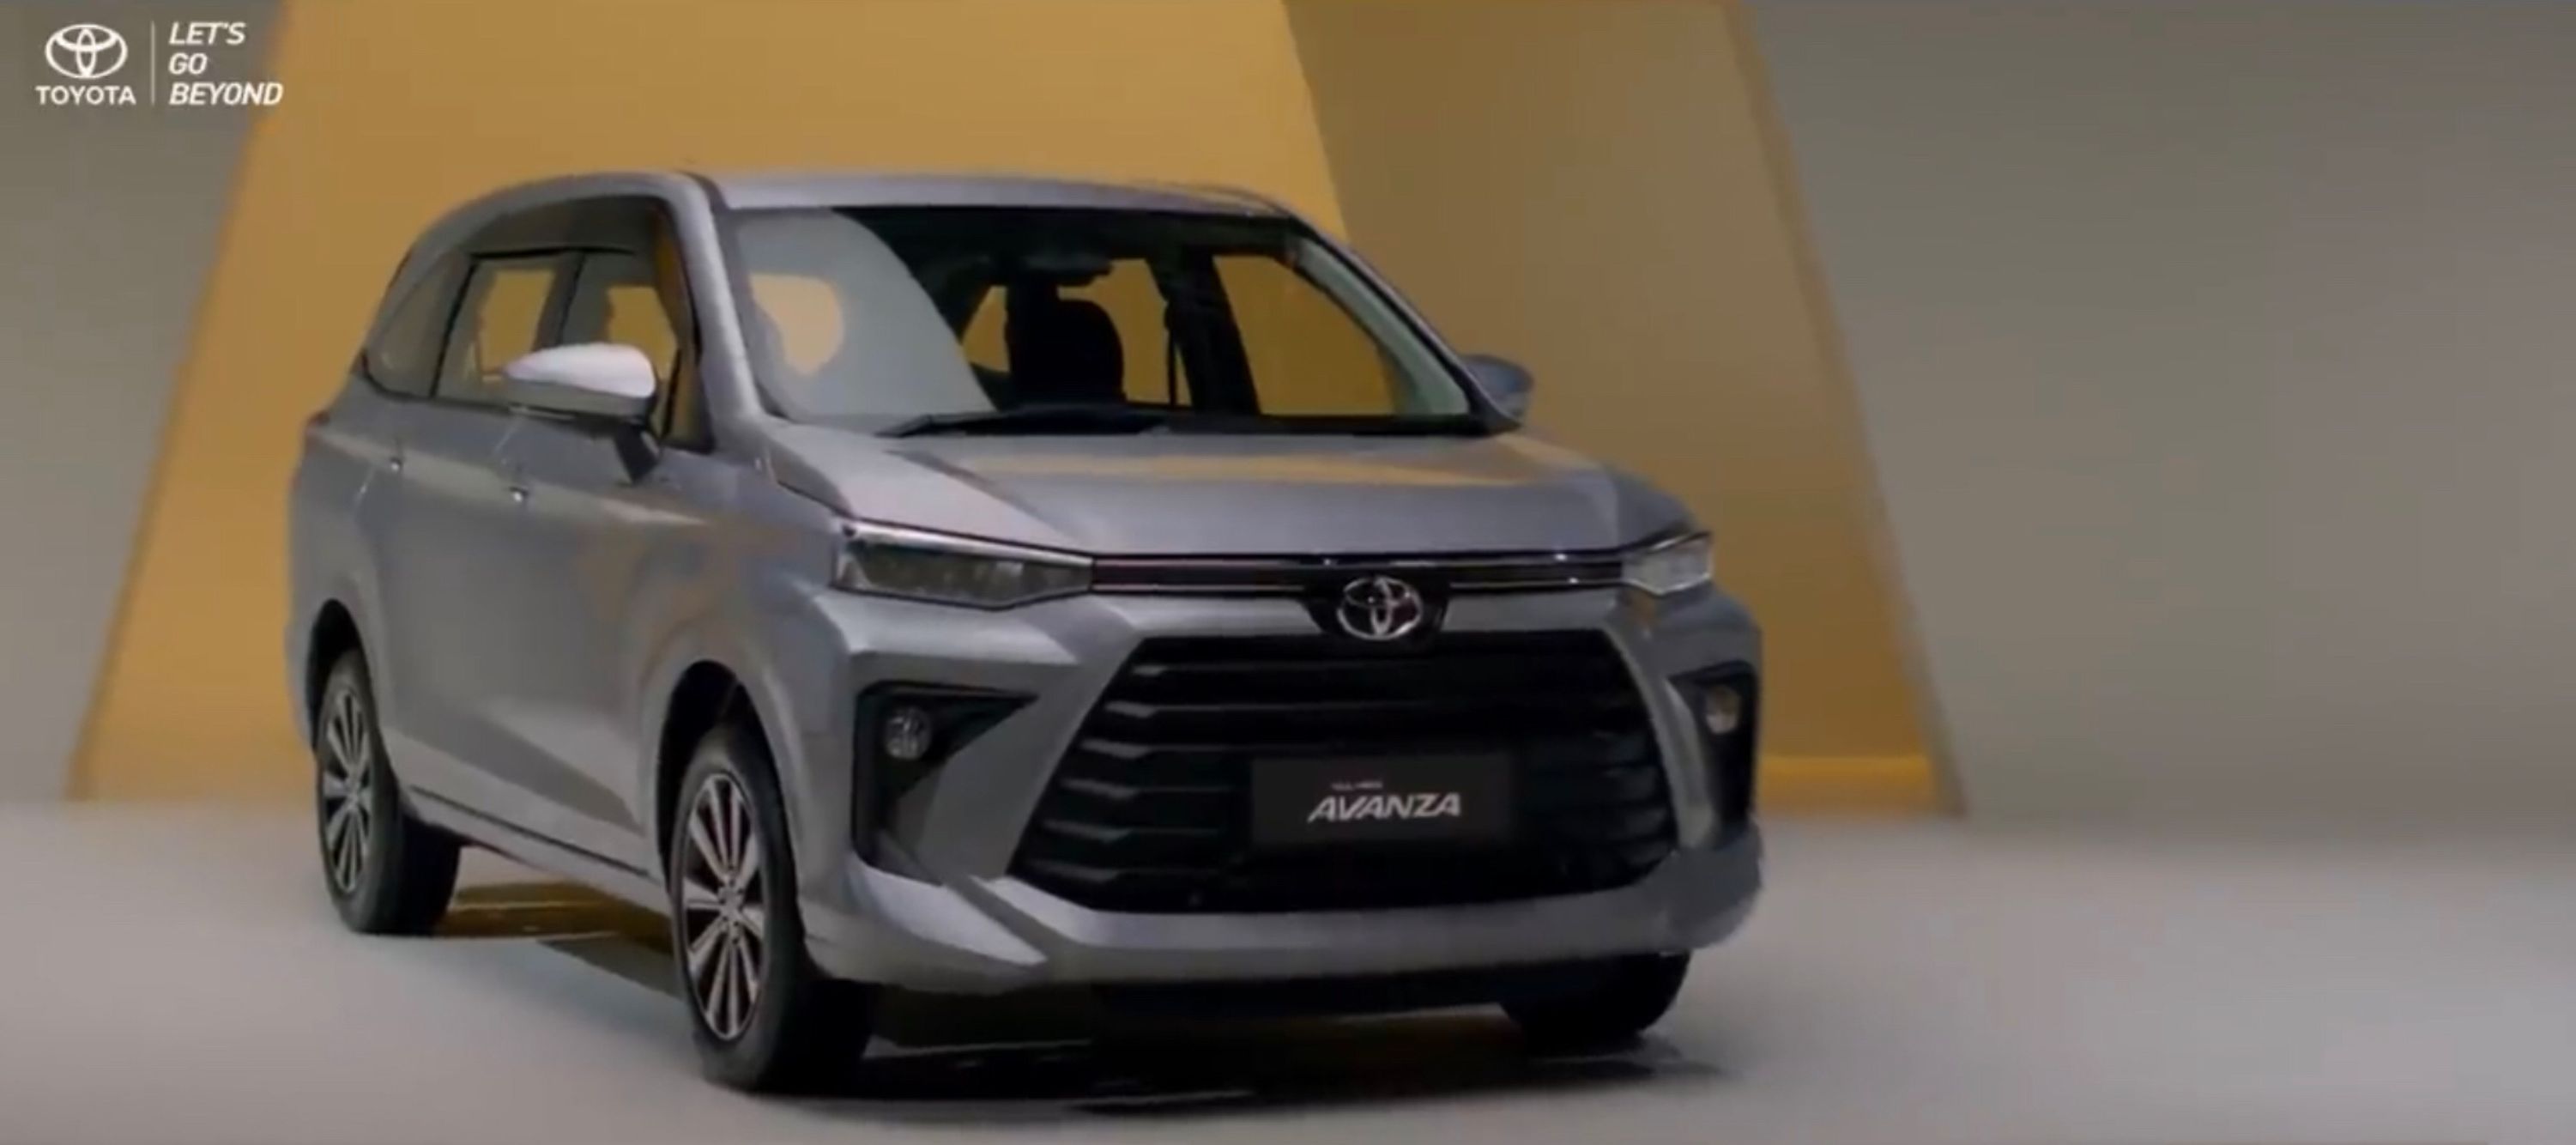 2022 avanza veloz harga toyota Review Toyota